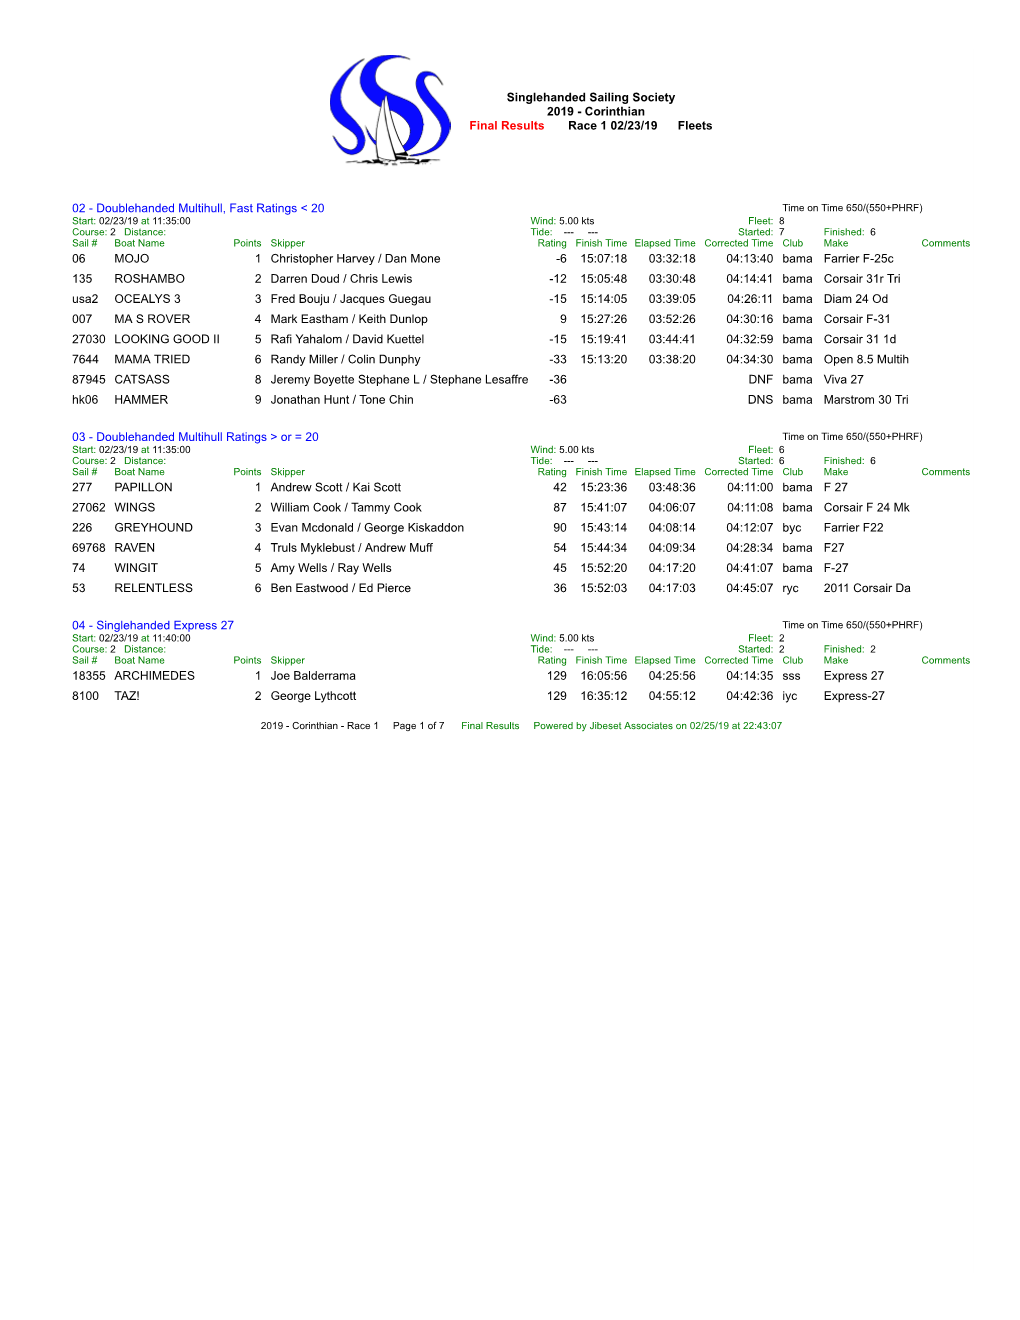 Corinthian Final Results Race 1 02/23/19 Fleets